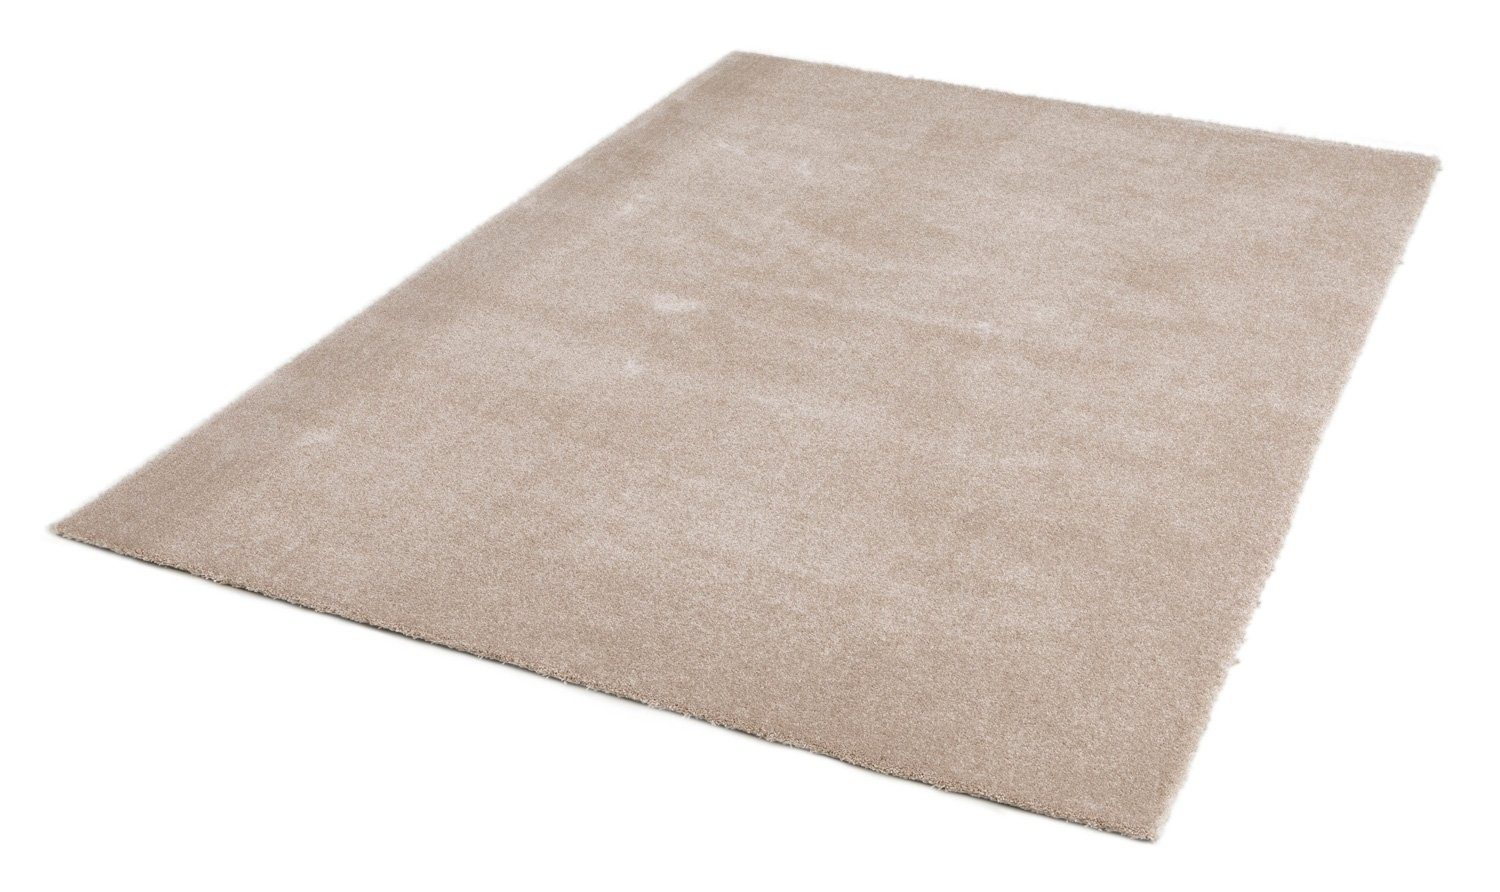 Teppich FAST, Polypropylen, Beige, 160 x 230 cm, Unifarben, Balta Rugs, rechteckig, Höhe: 17 mm